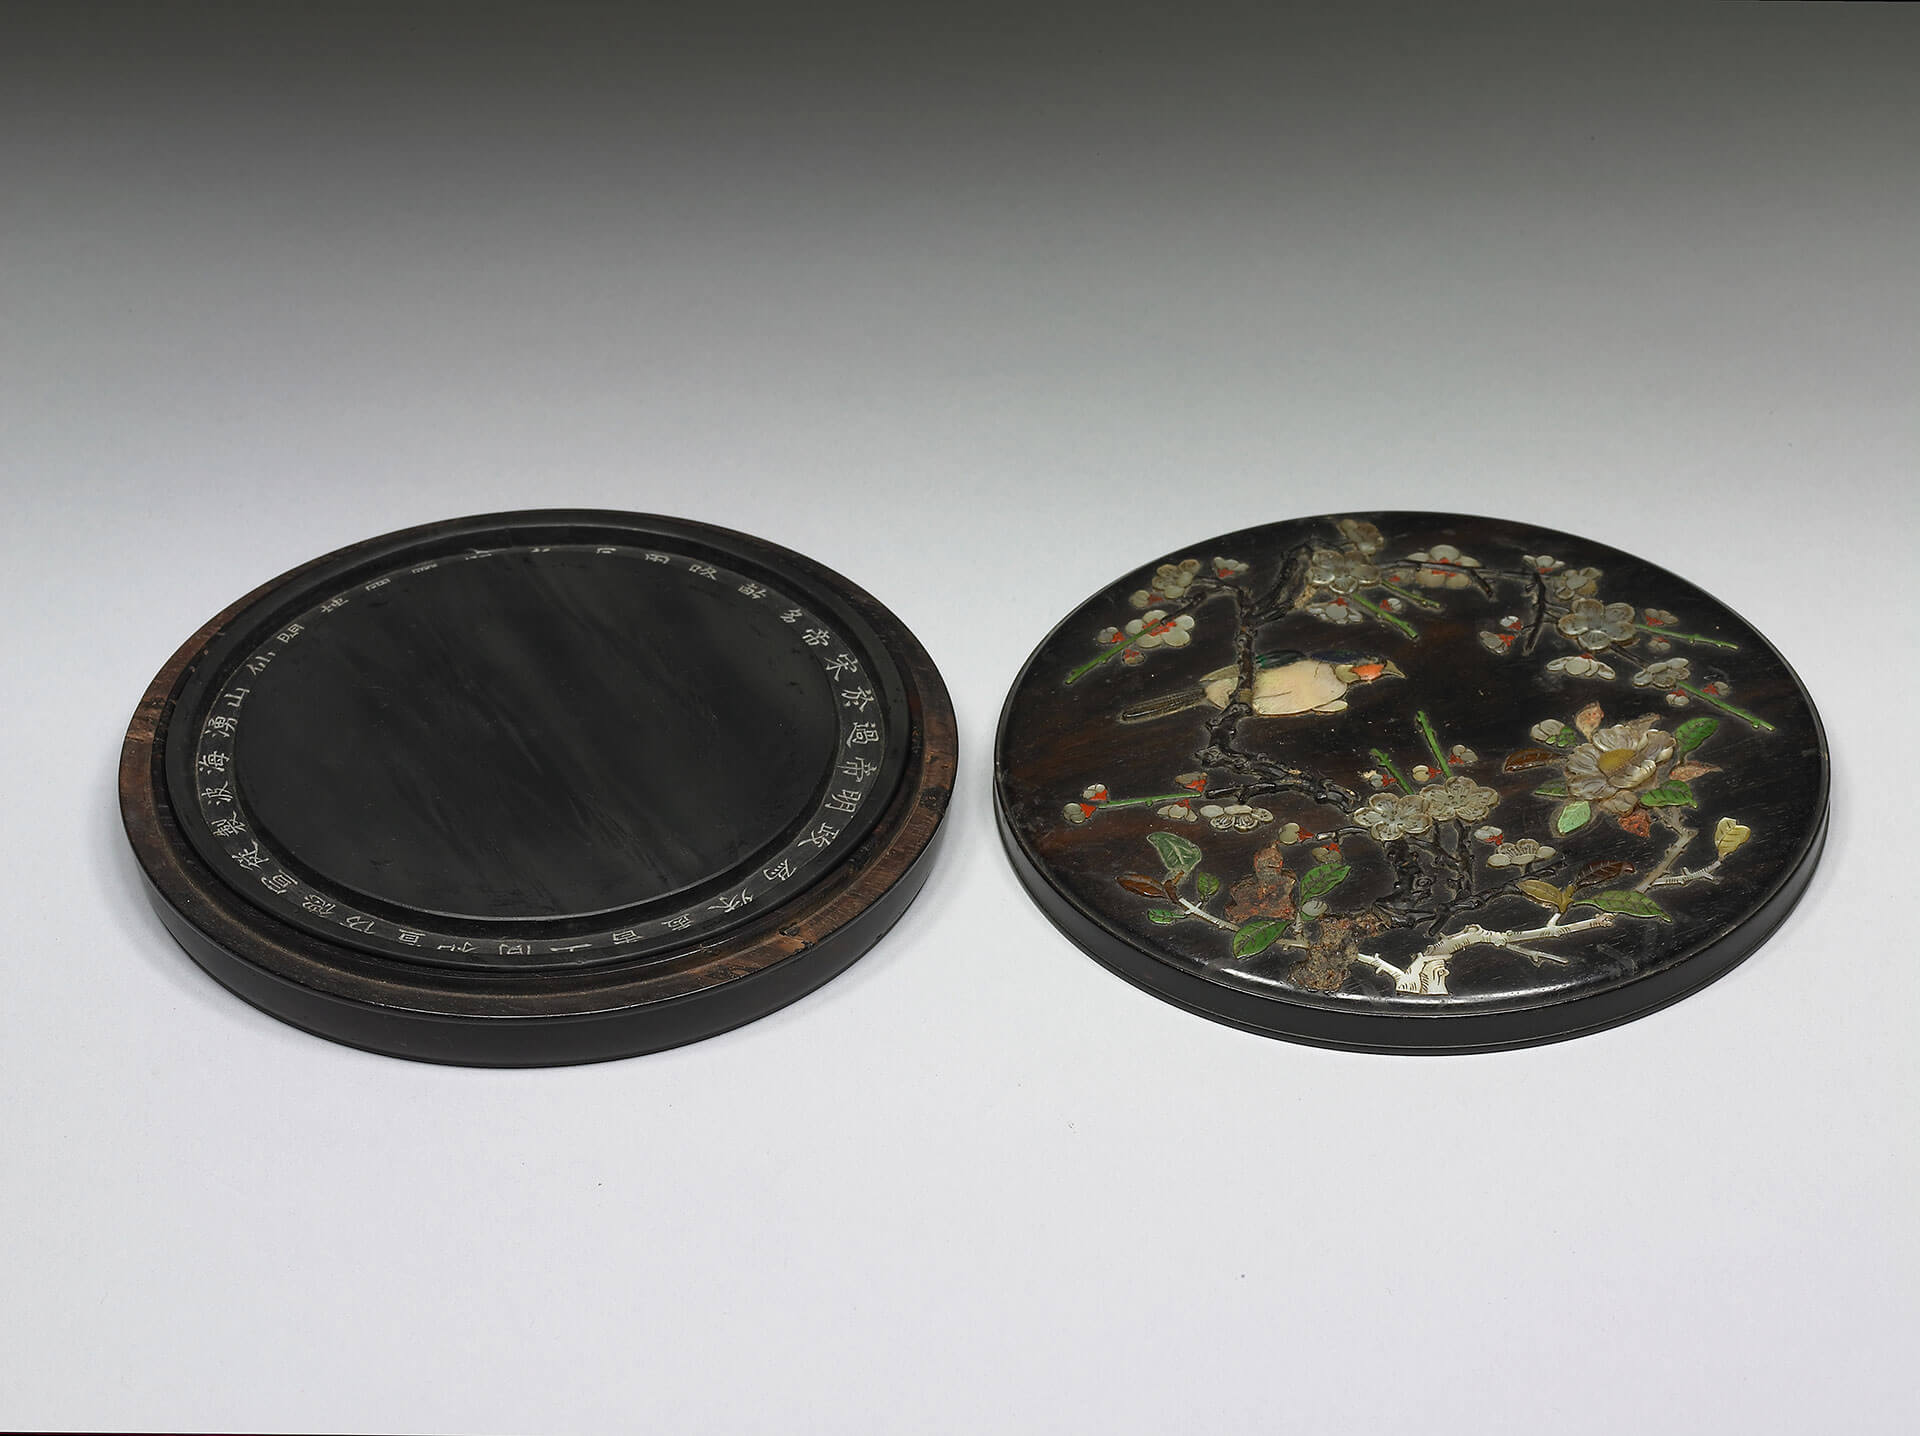 Xi-stone inkstone with treasure-inlaid box